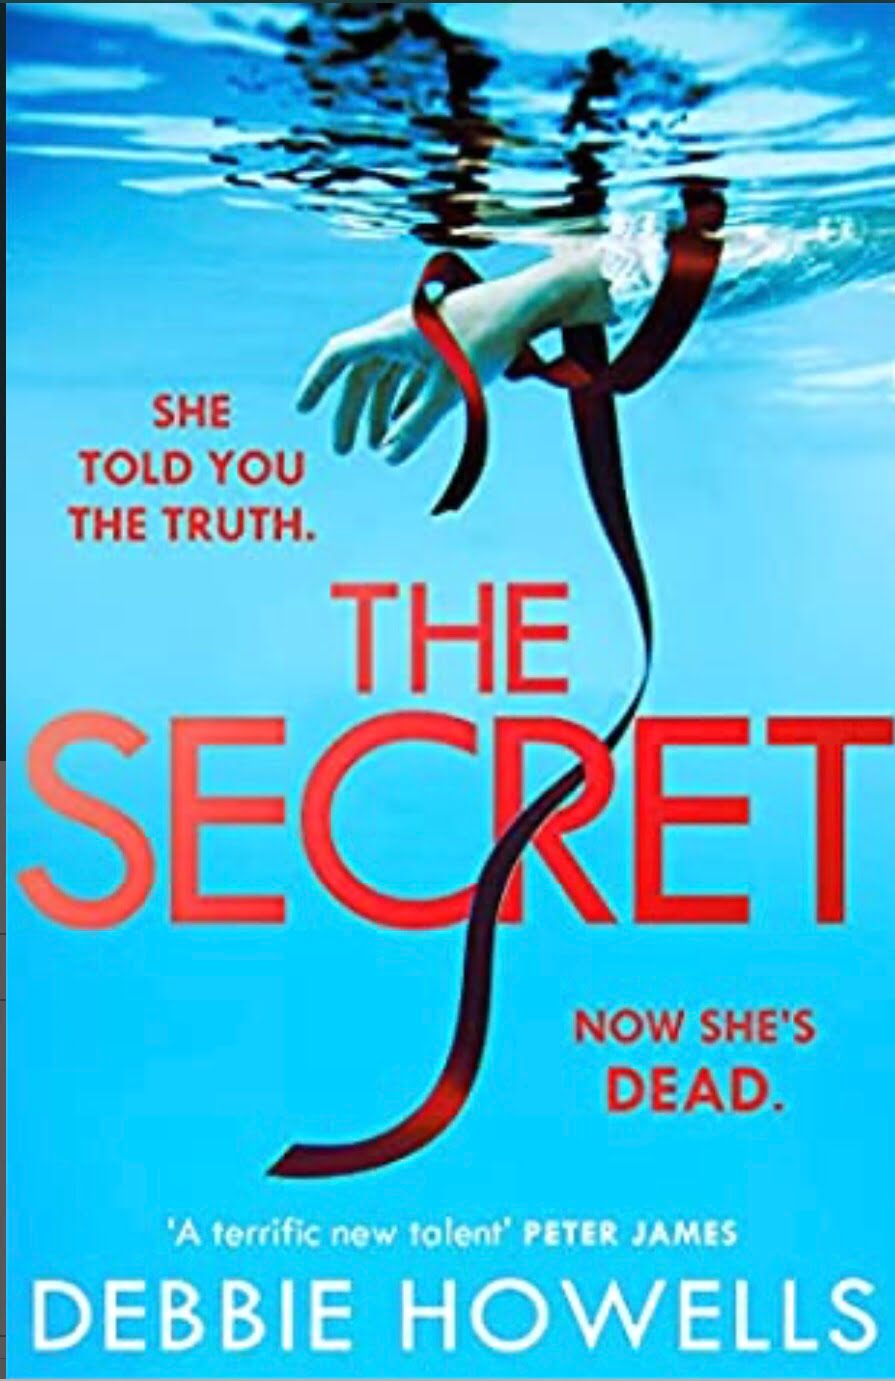 THE SECRET BY DEBBIE HOWELLS – BOOK REVIEW